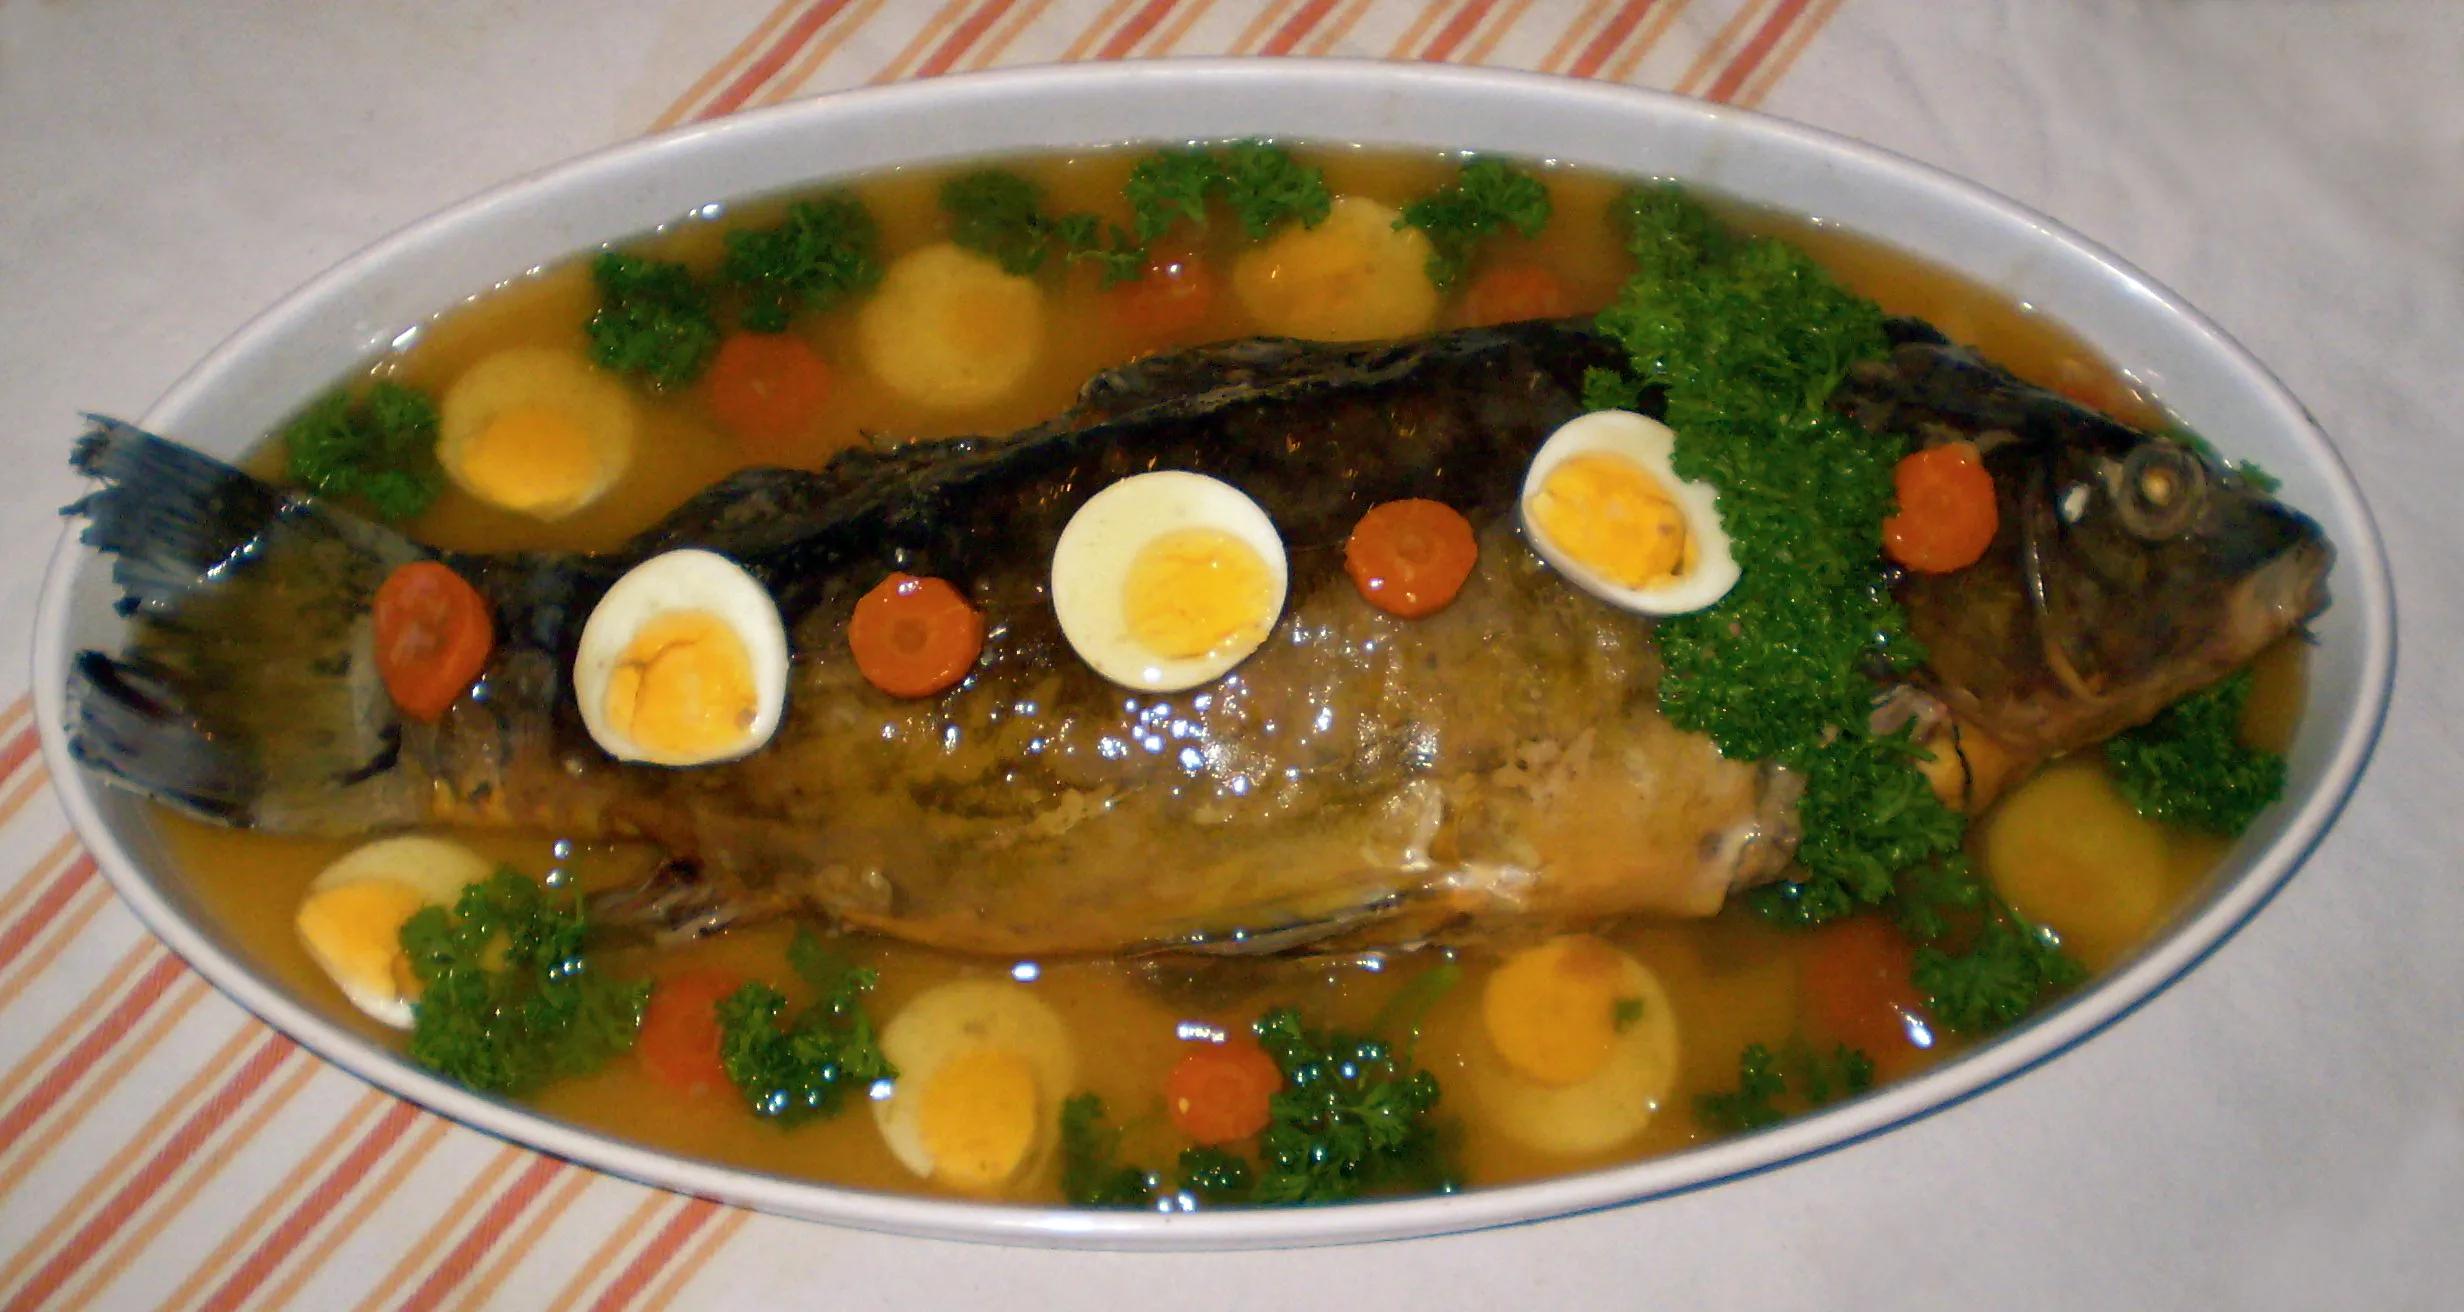 File:Gefilte Fish.jpg - Wikipedia, the free encyclopedia